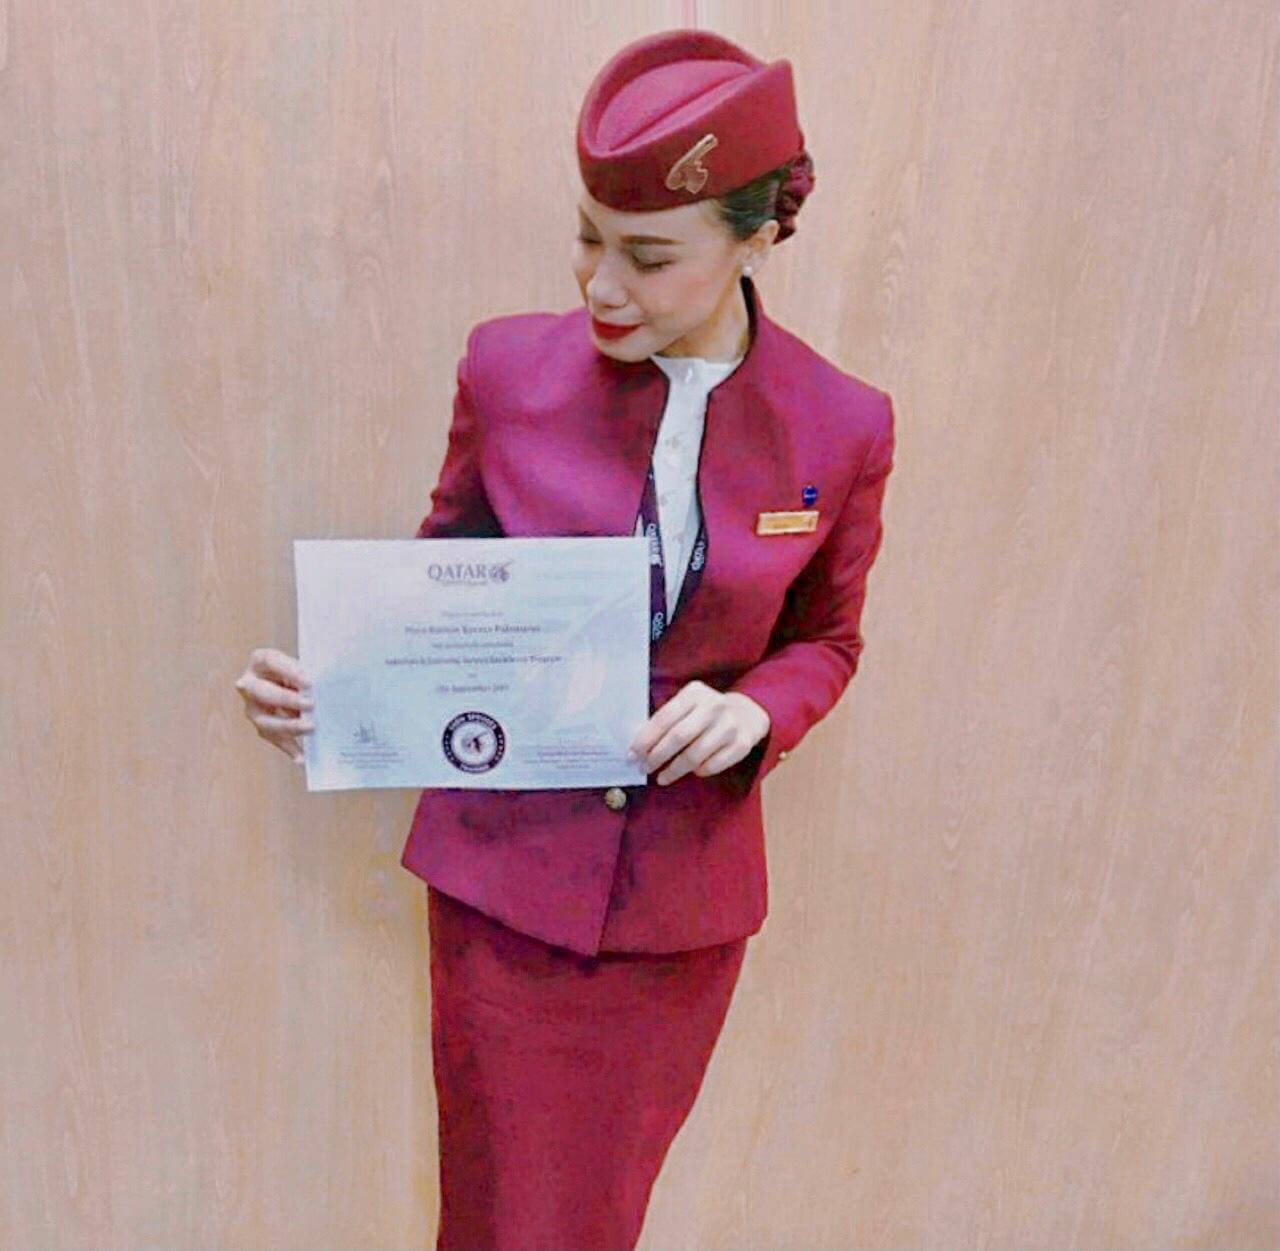 Flight attendant Mara finds success in financial advisory: “I’m s